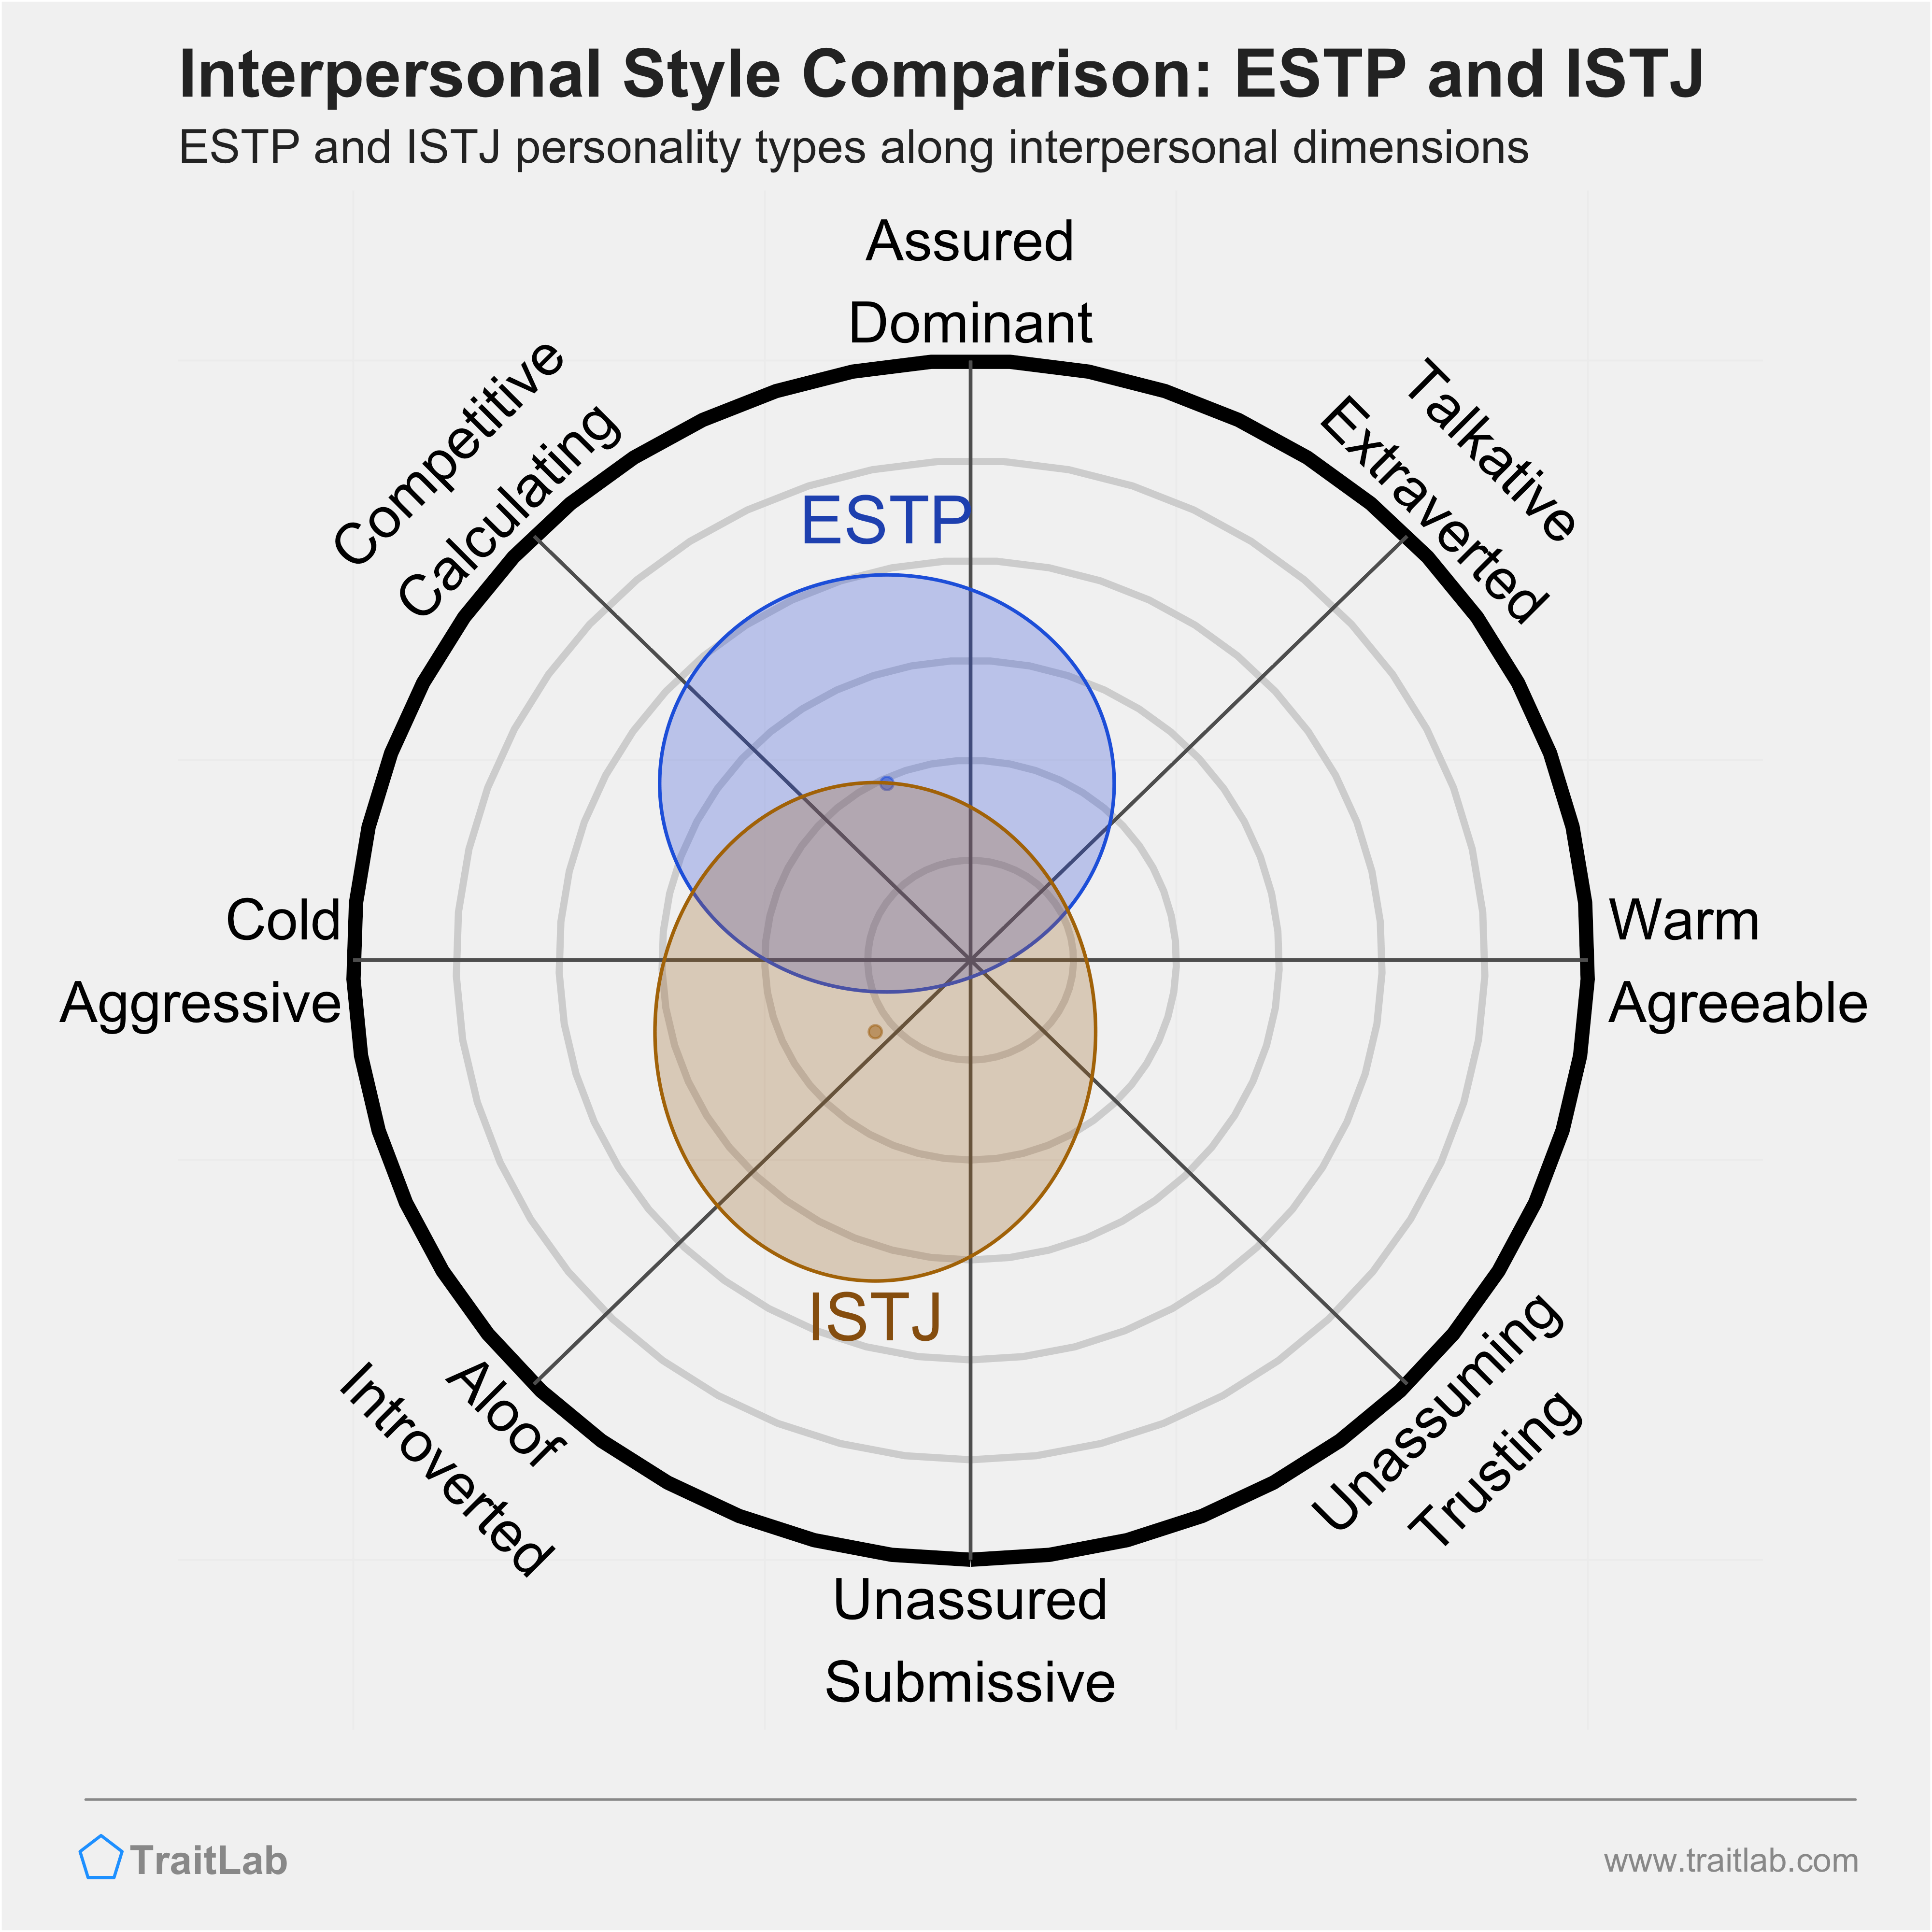 ESTP and ISTJ comparison across interpersonal dimensions